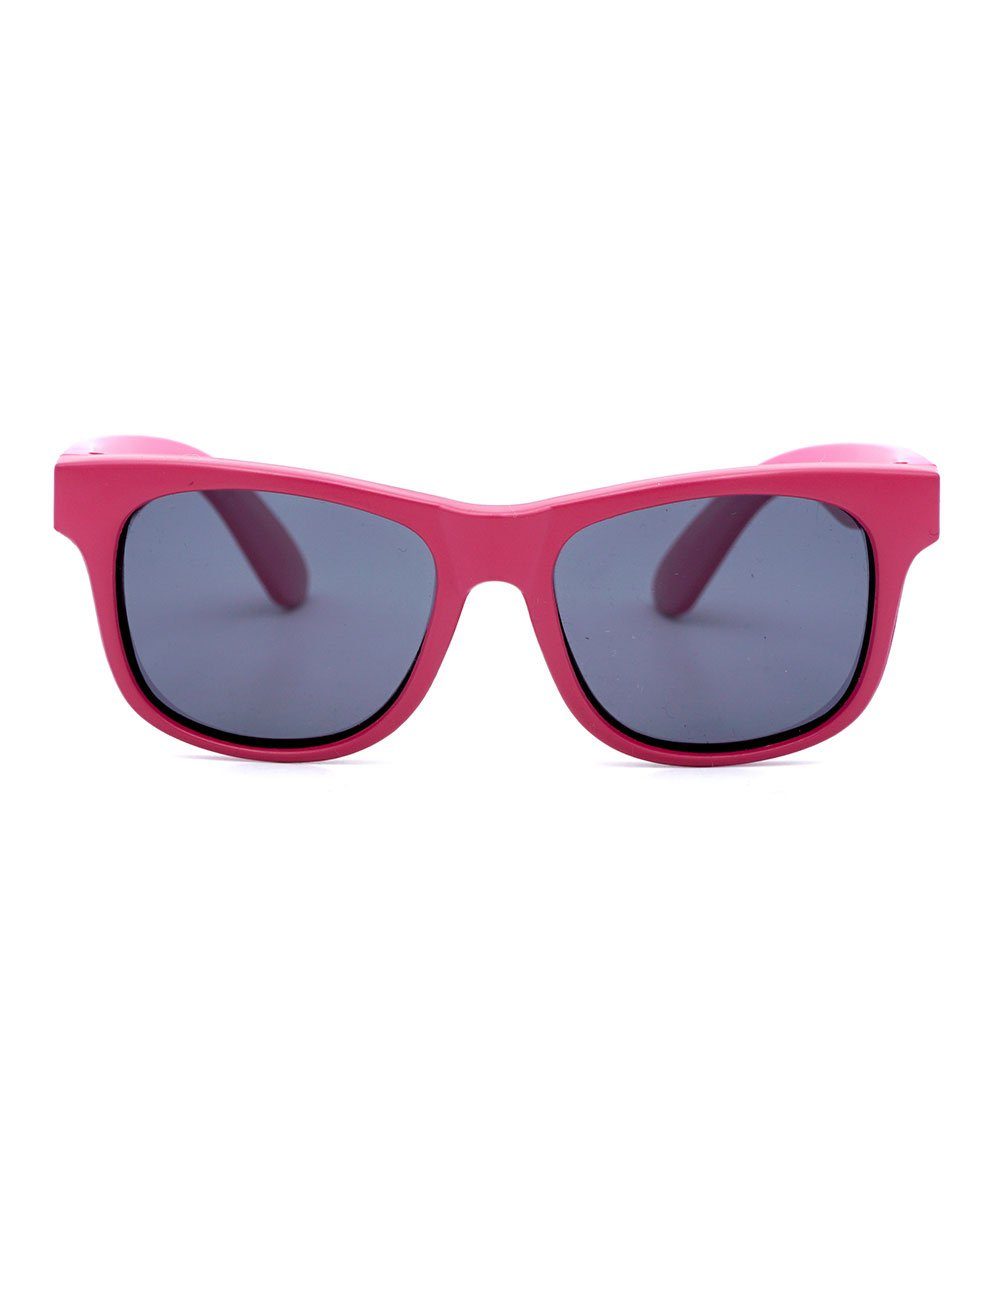 MAXIMO Sonnenbrille KIDS-Sonnenbrille 'classic', inkl.Box,Microfaserb berry/pink | Kindersonnenbrillen